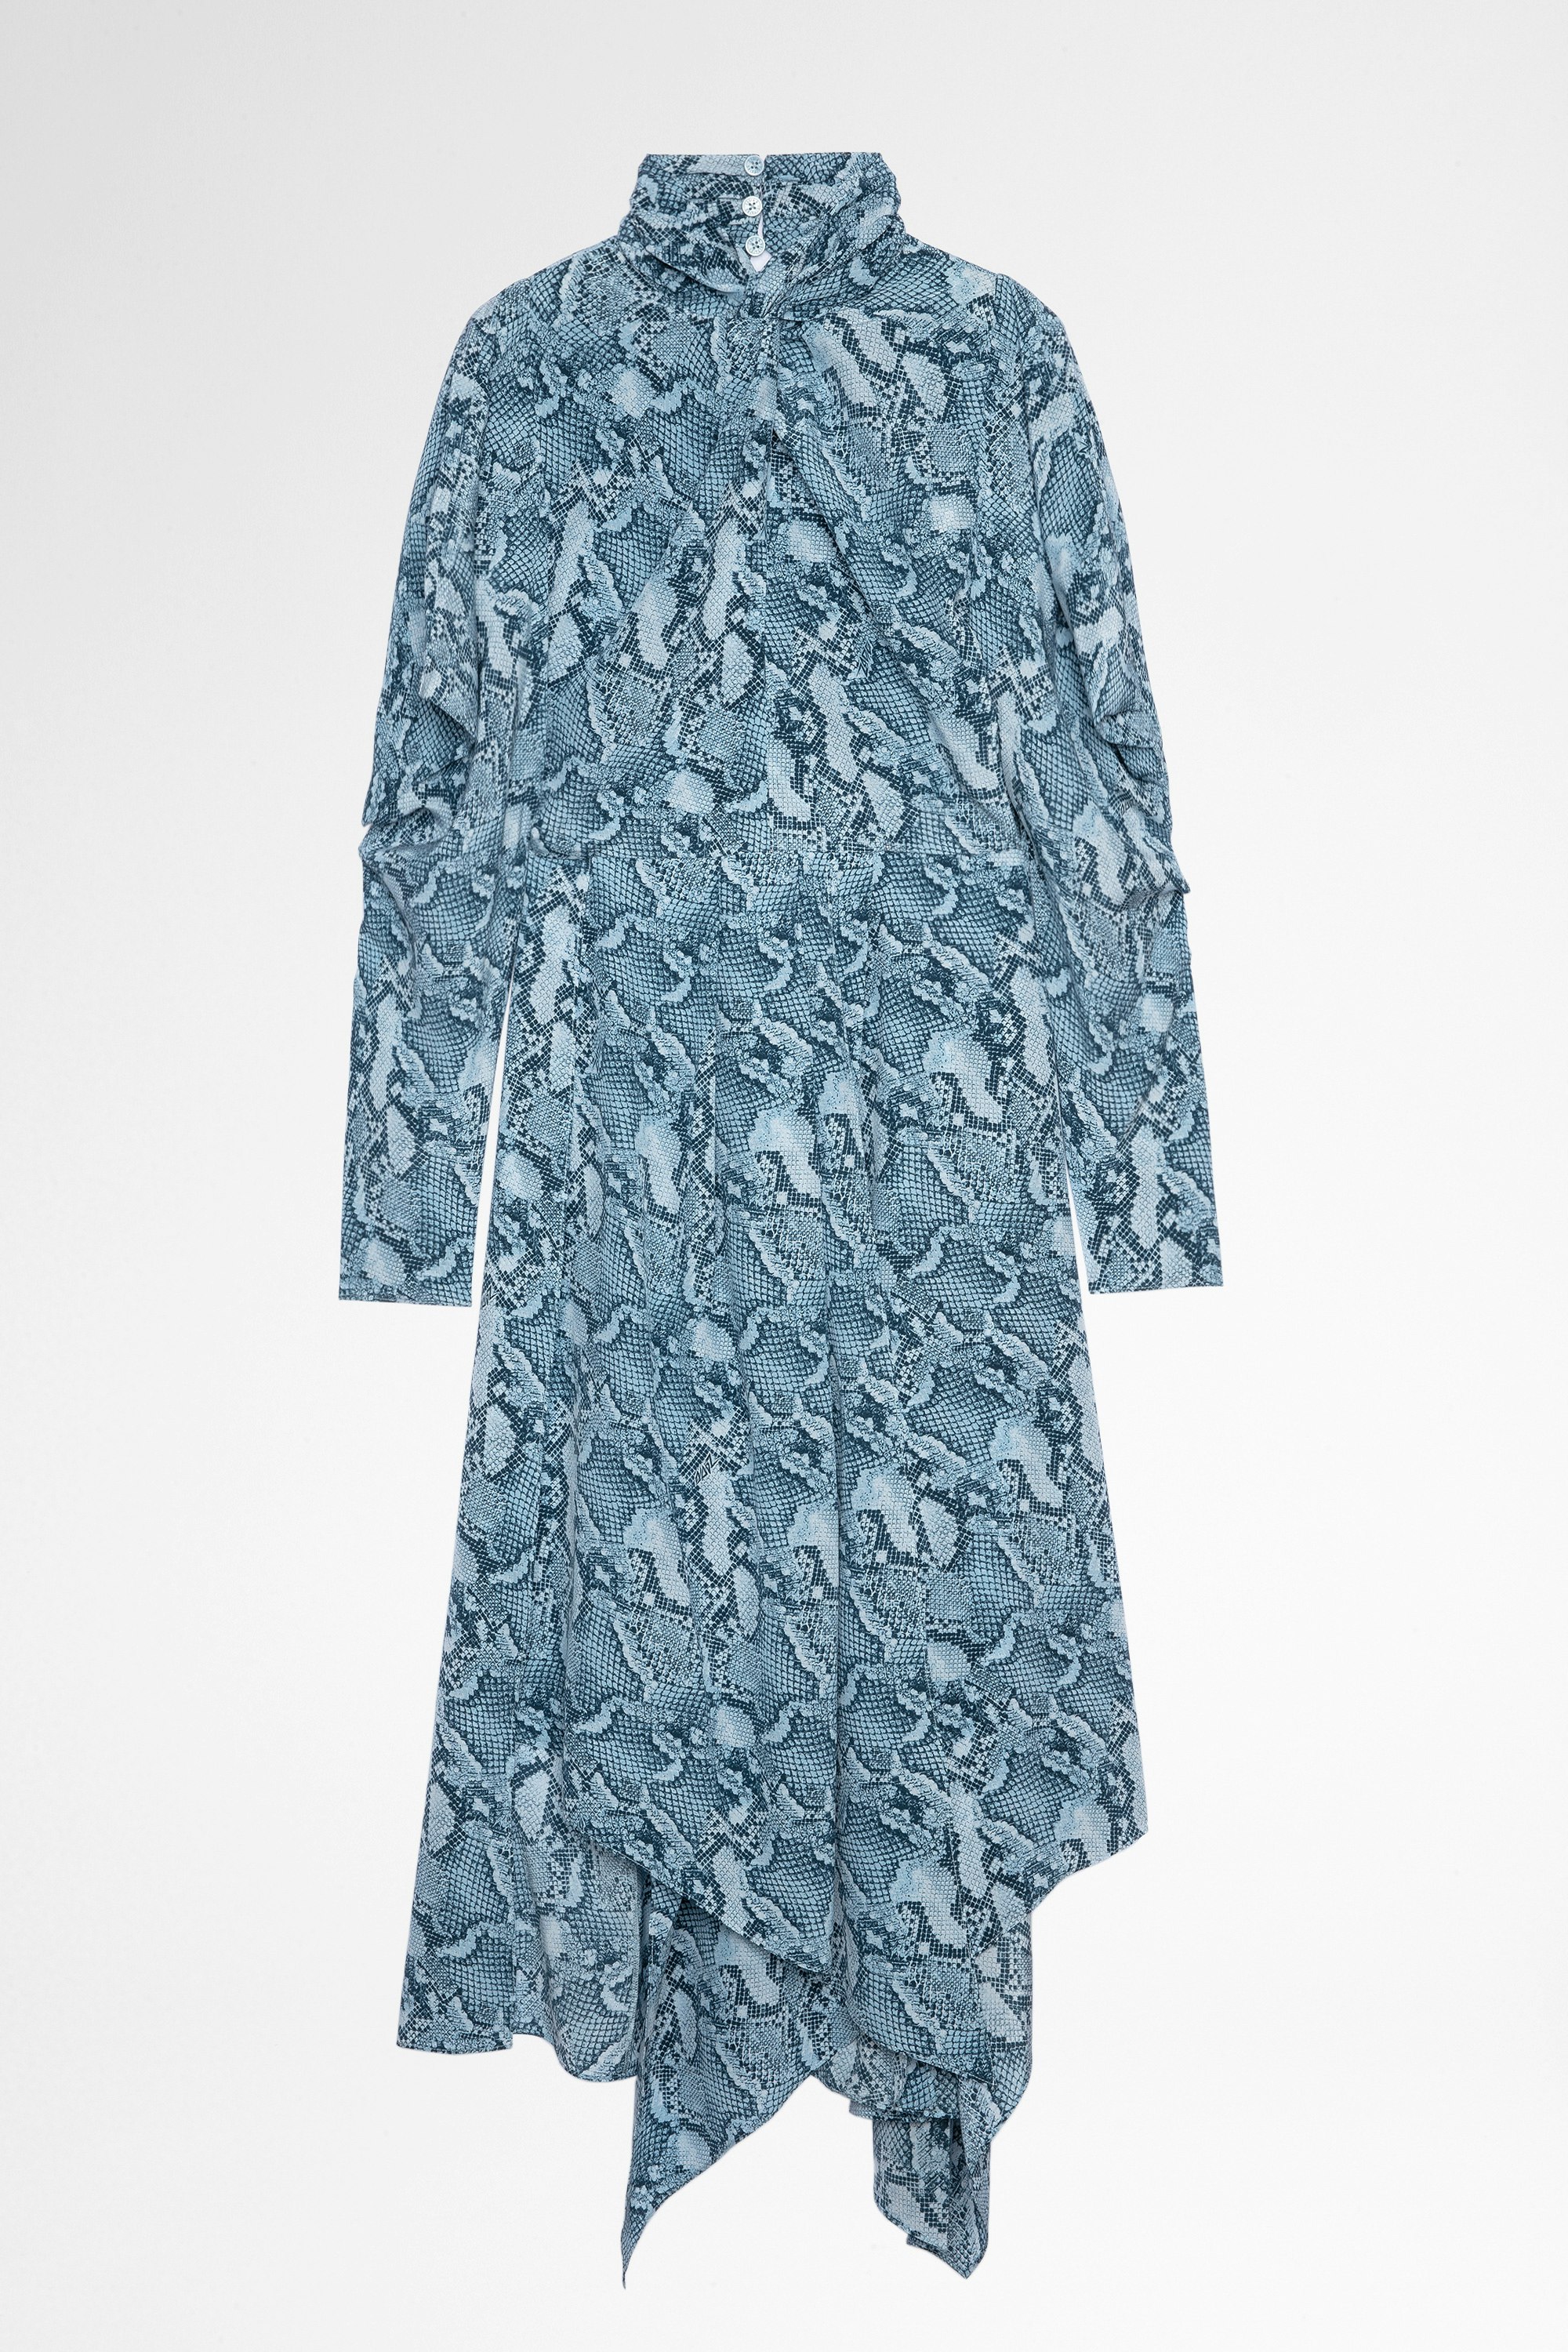 Roy Silk Dress Women's asymmetrical dress in silk with snake print